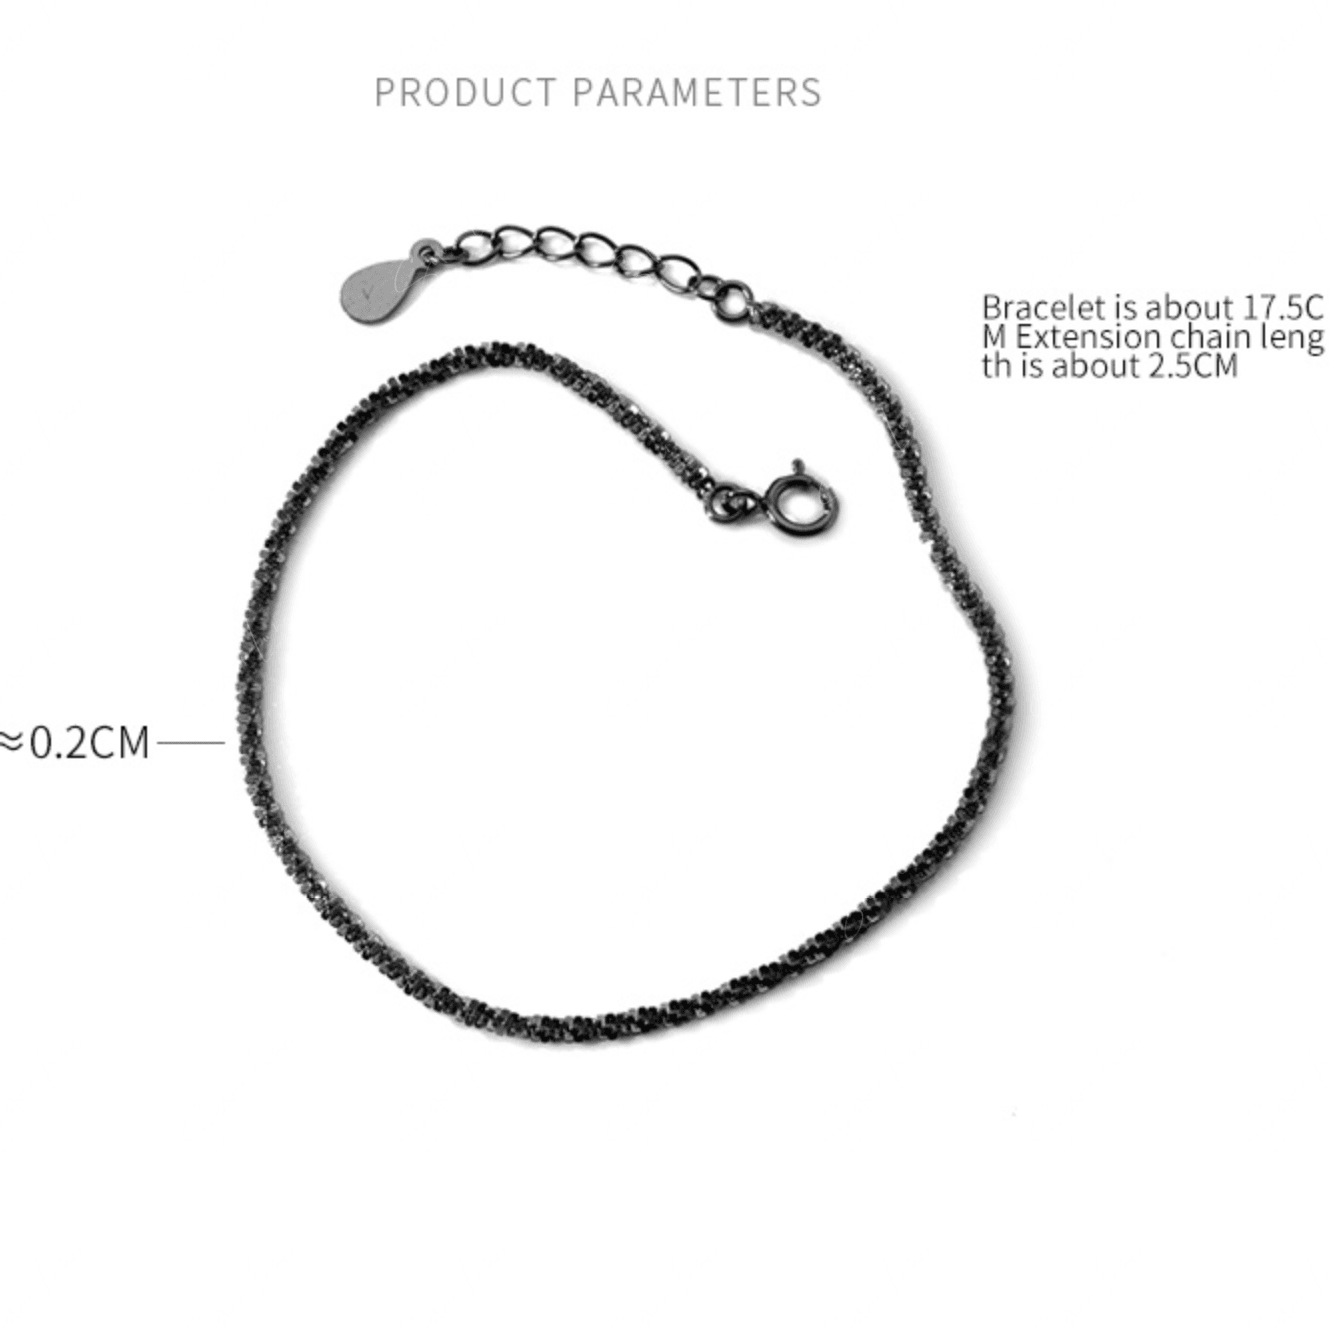 Minimalist twist chain bracelet